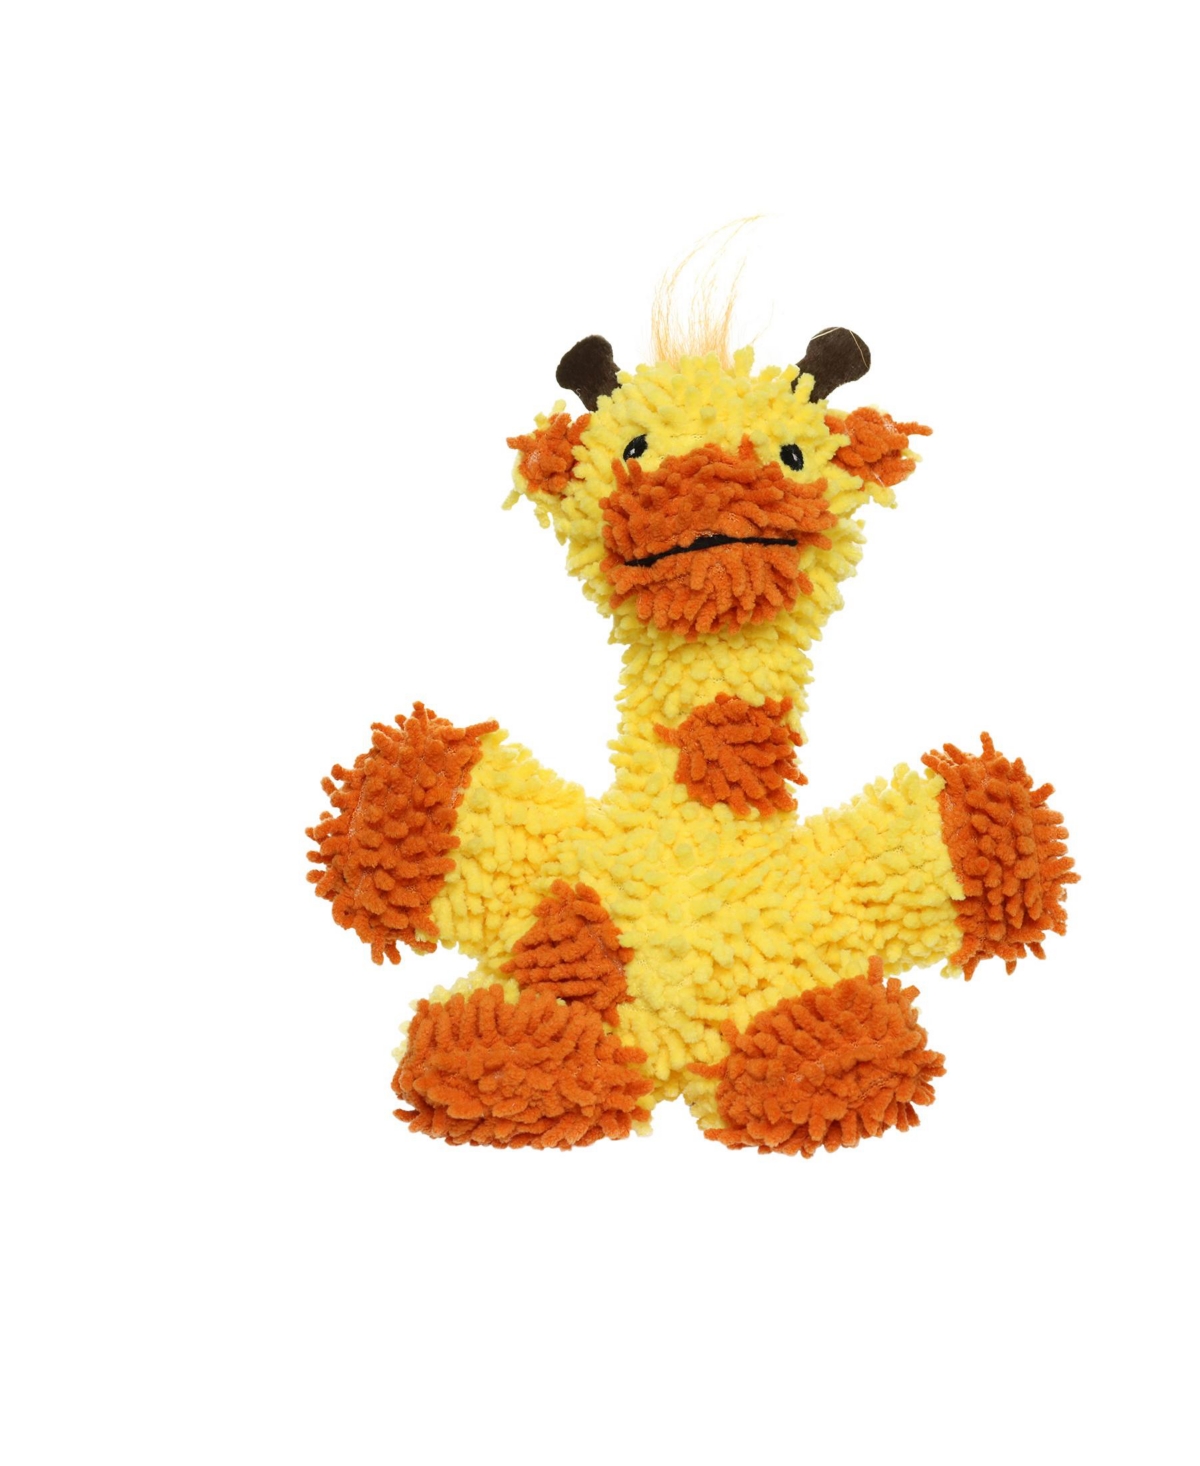 Jr Microfiber Ball Giraffe, Dog Toy - Yellow